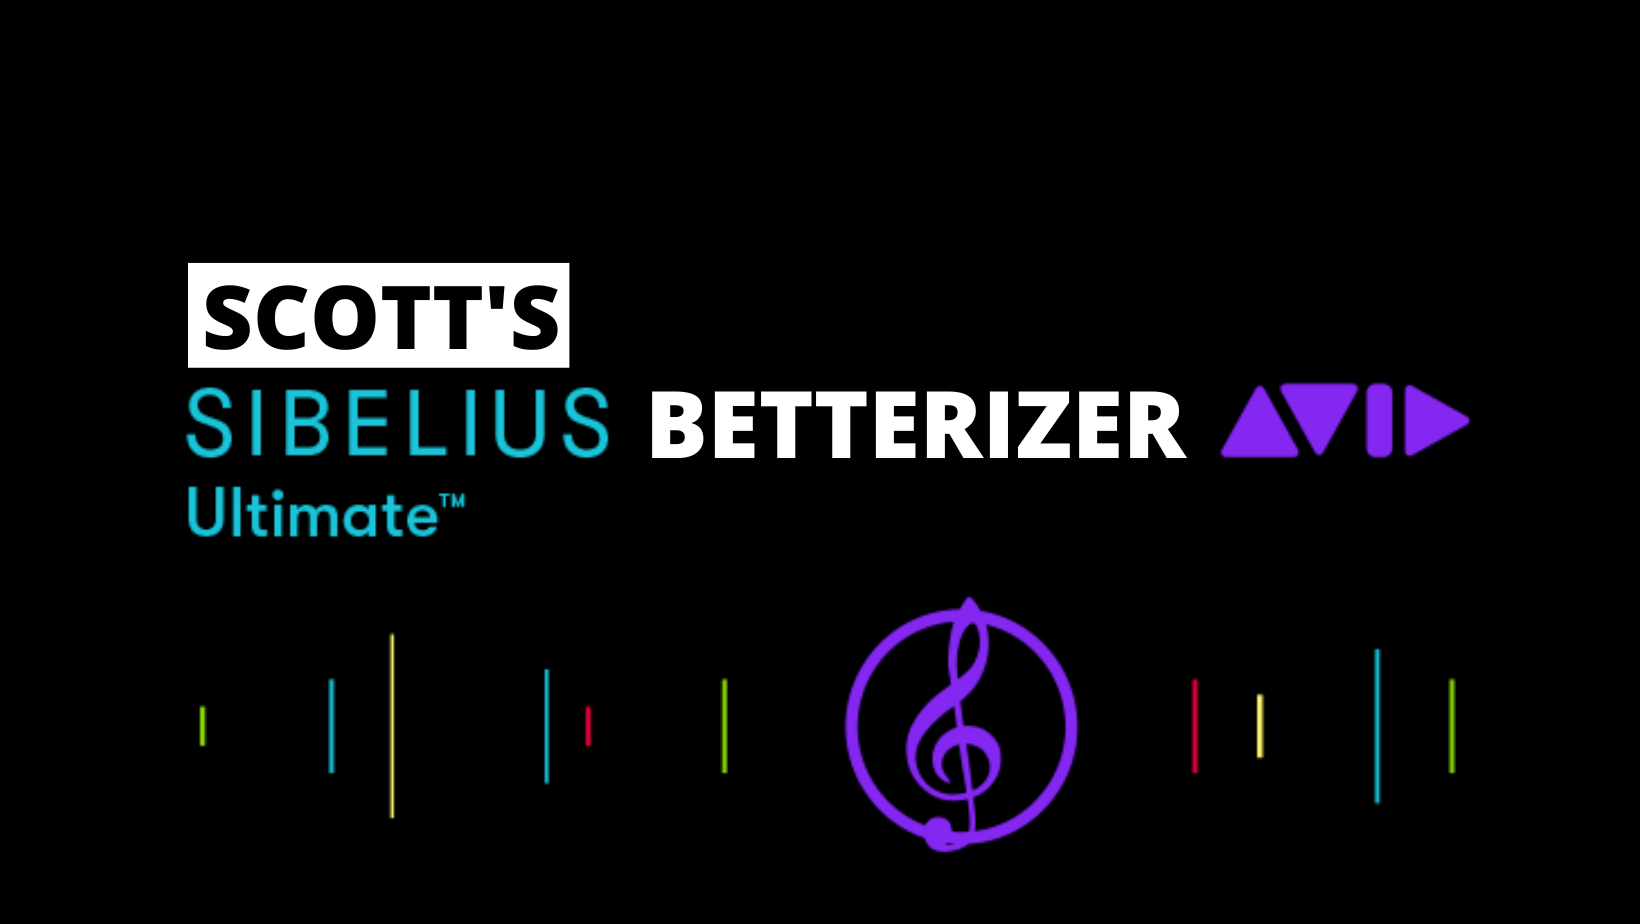 Scott's Sibelius Betterizer (testing in progress)